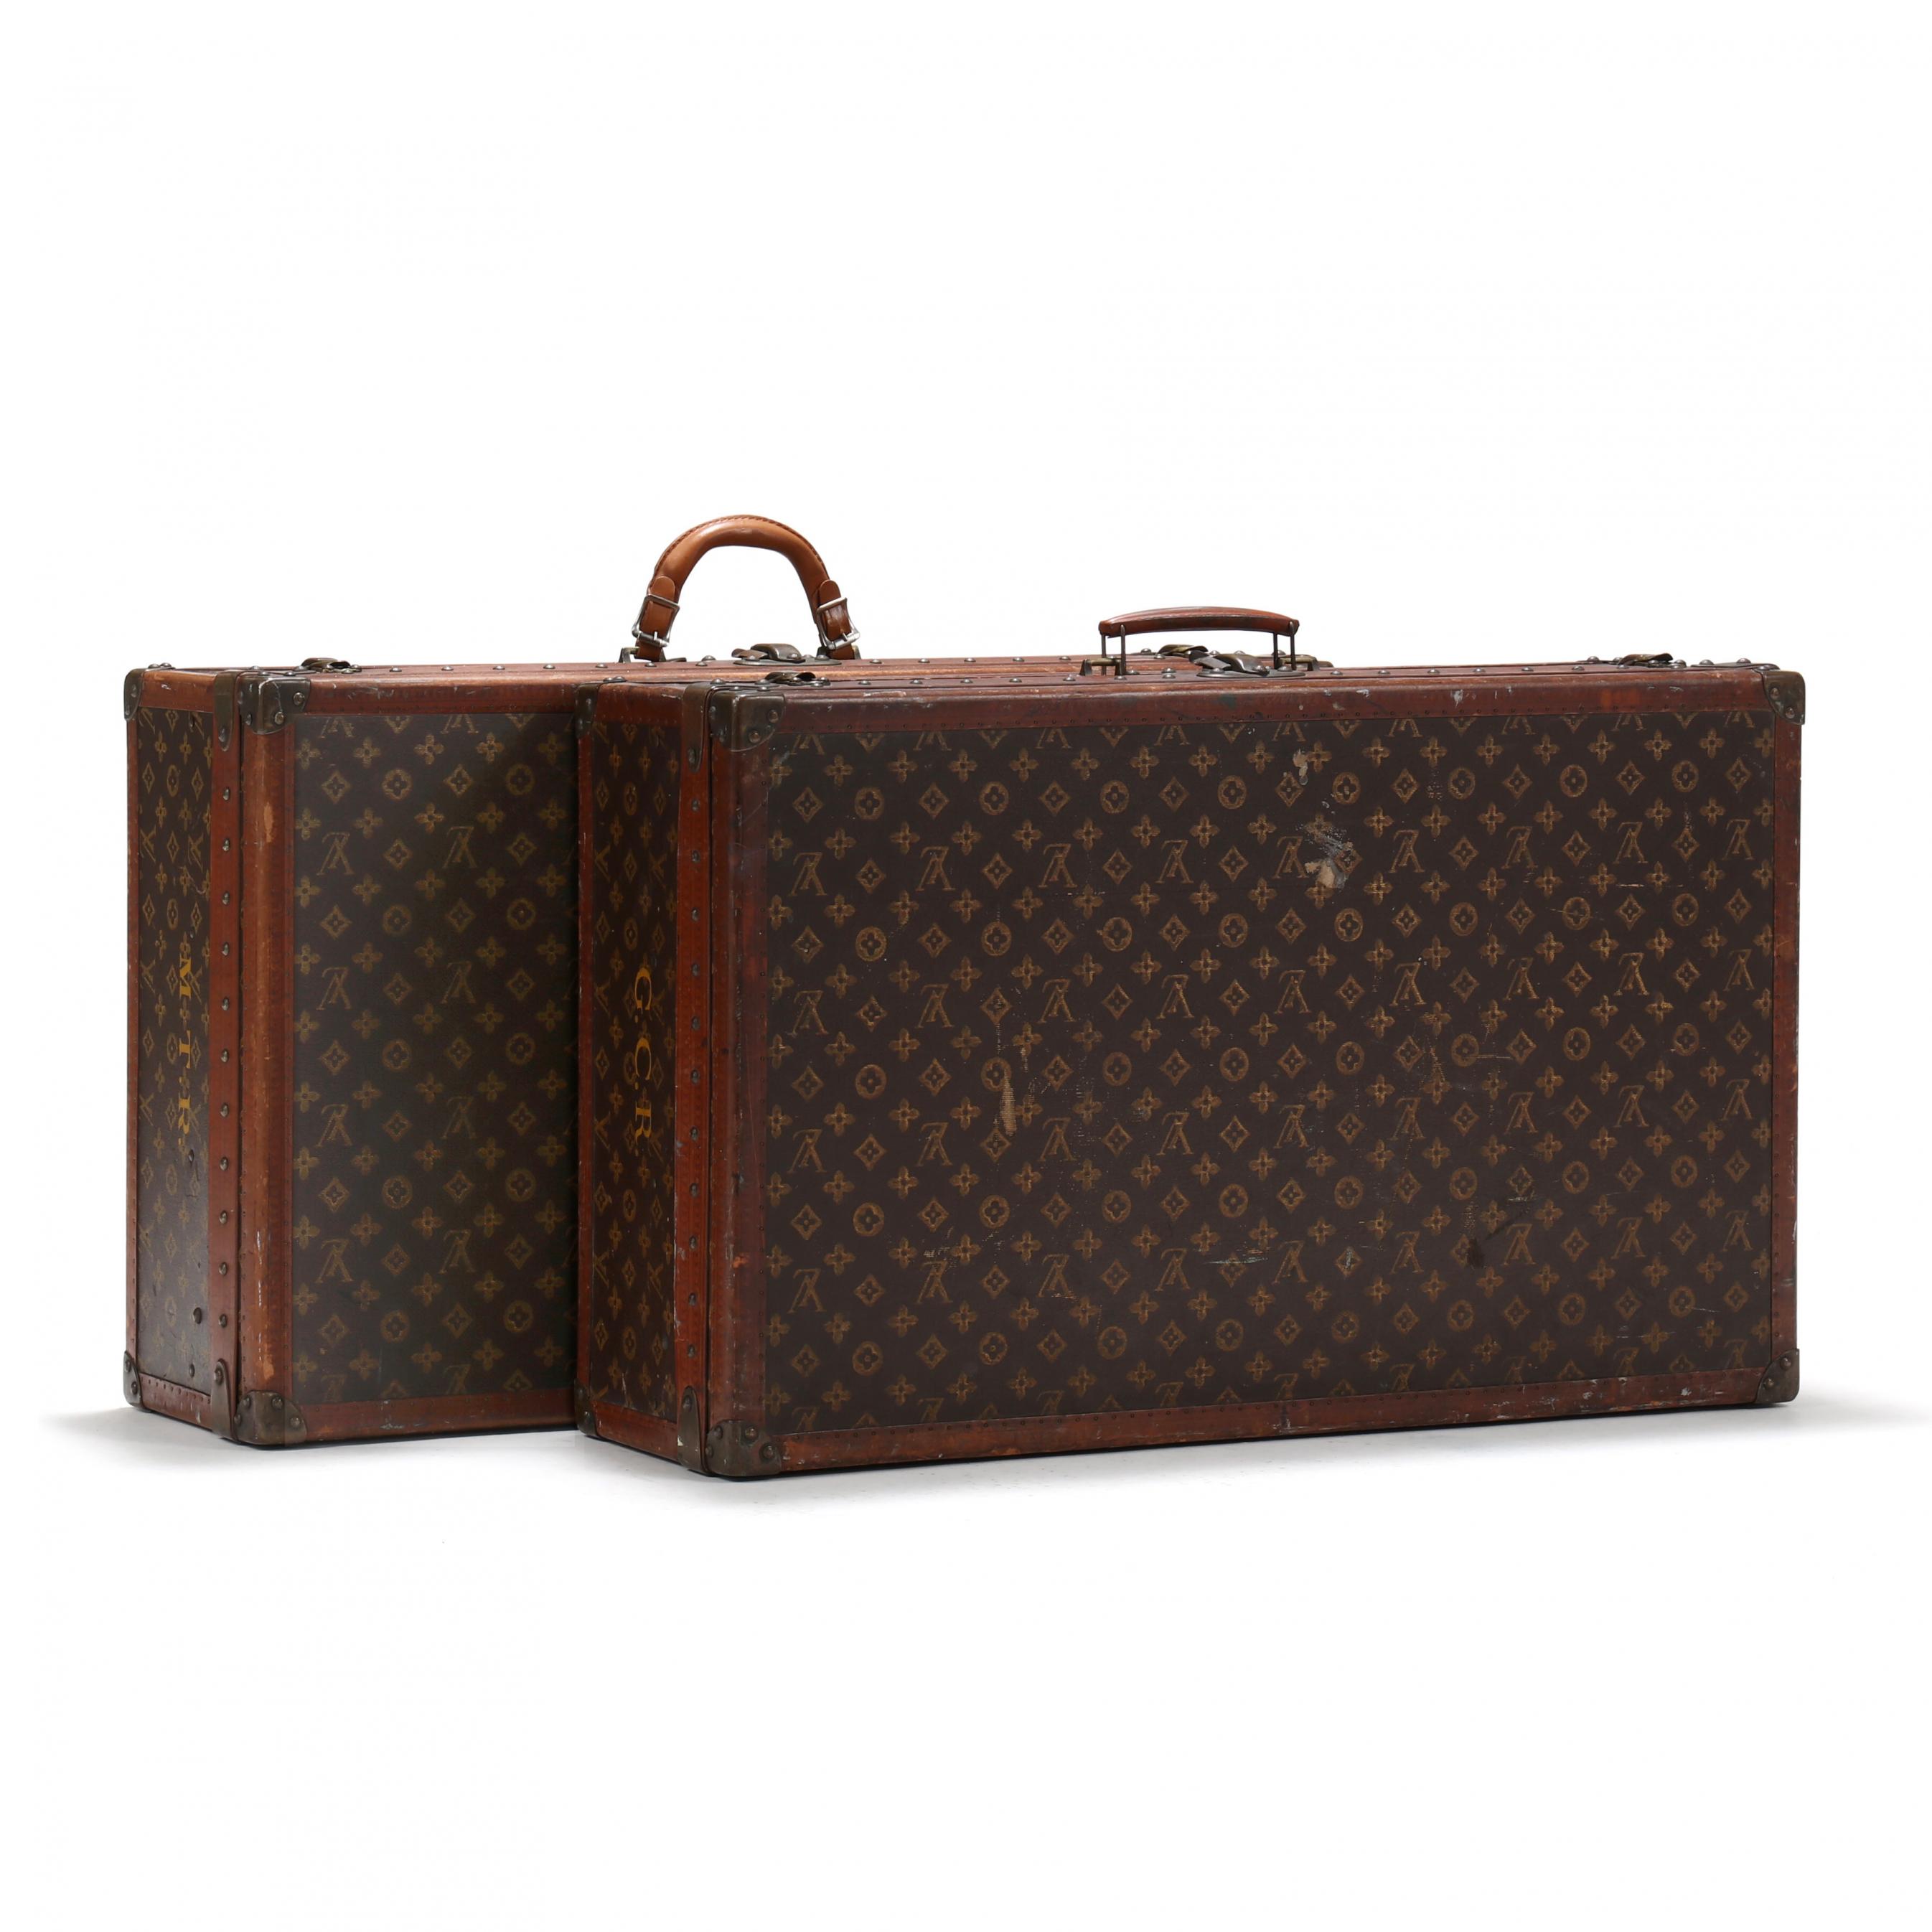 Alzer 70 Suitcase - Luxury Monogram Canvas Brown